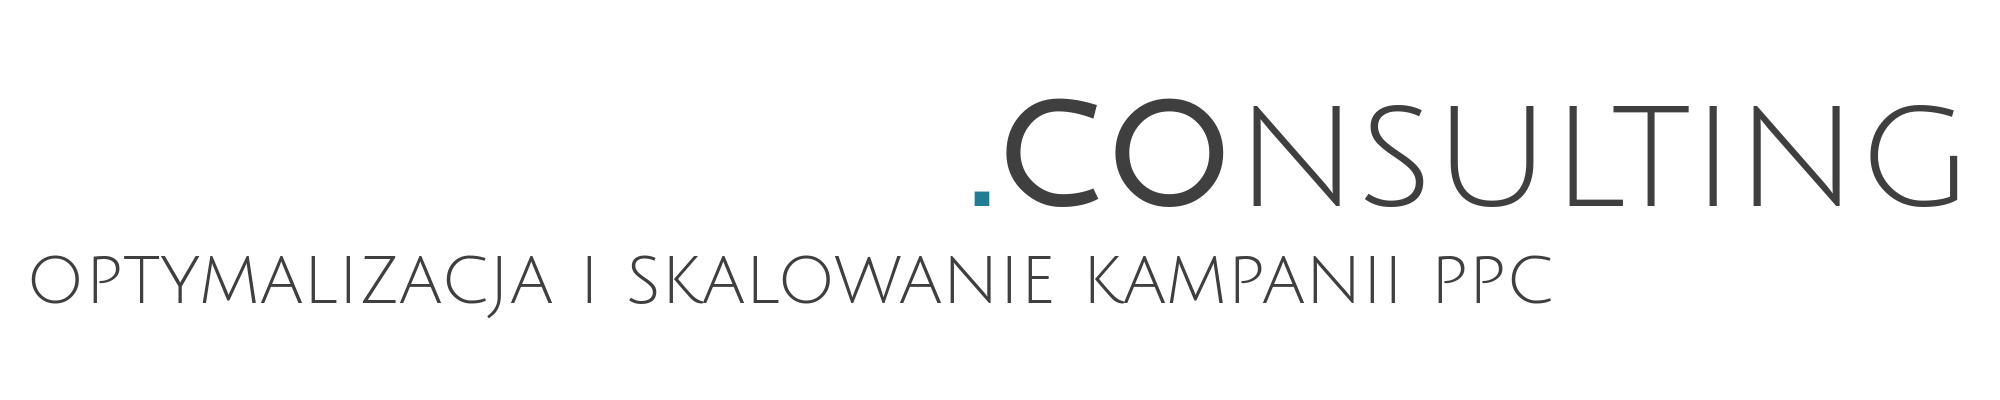 czajkowski.consulting logo